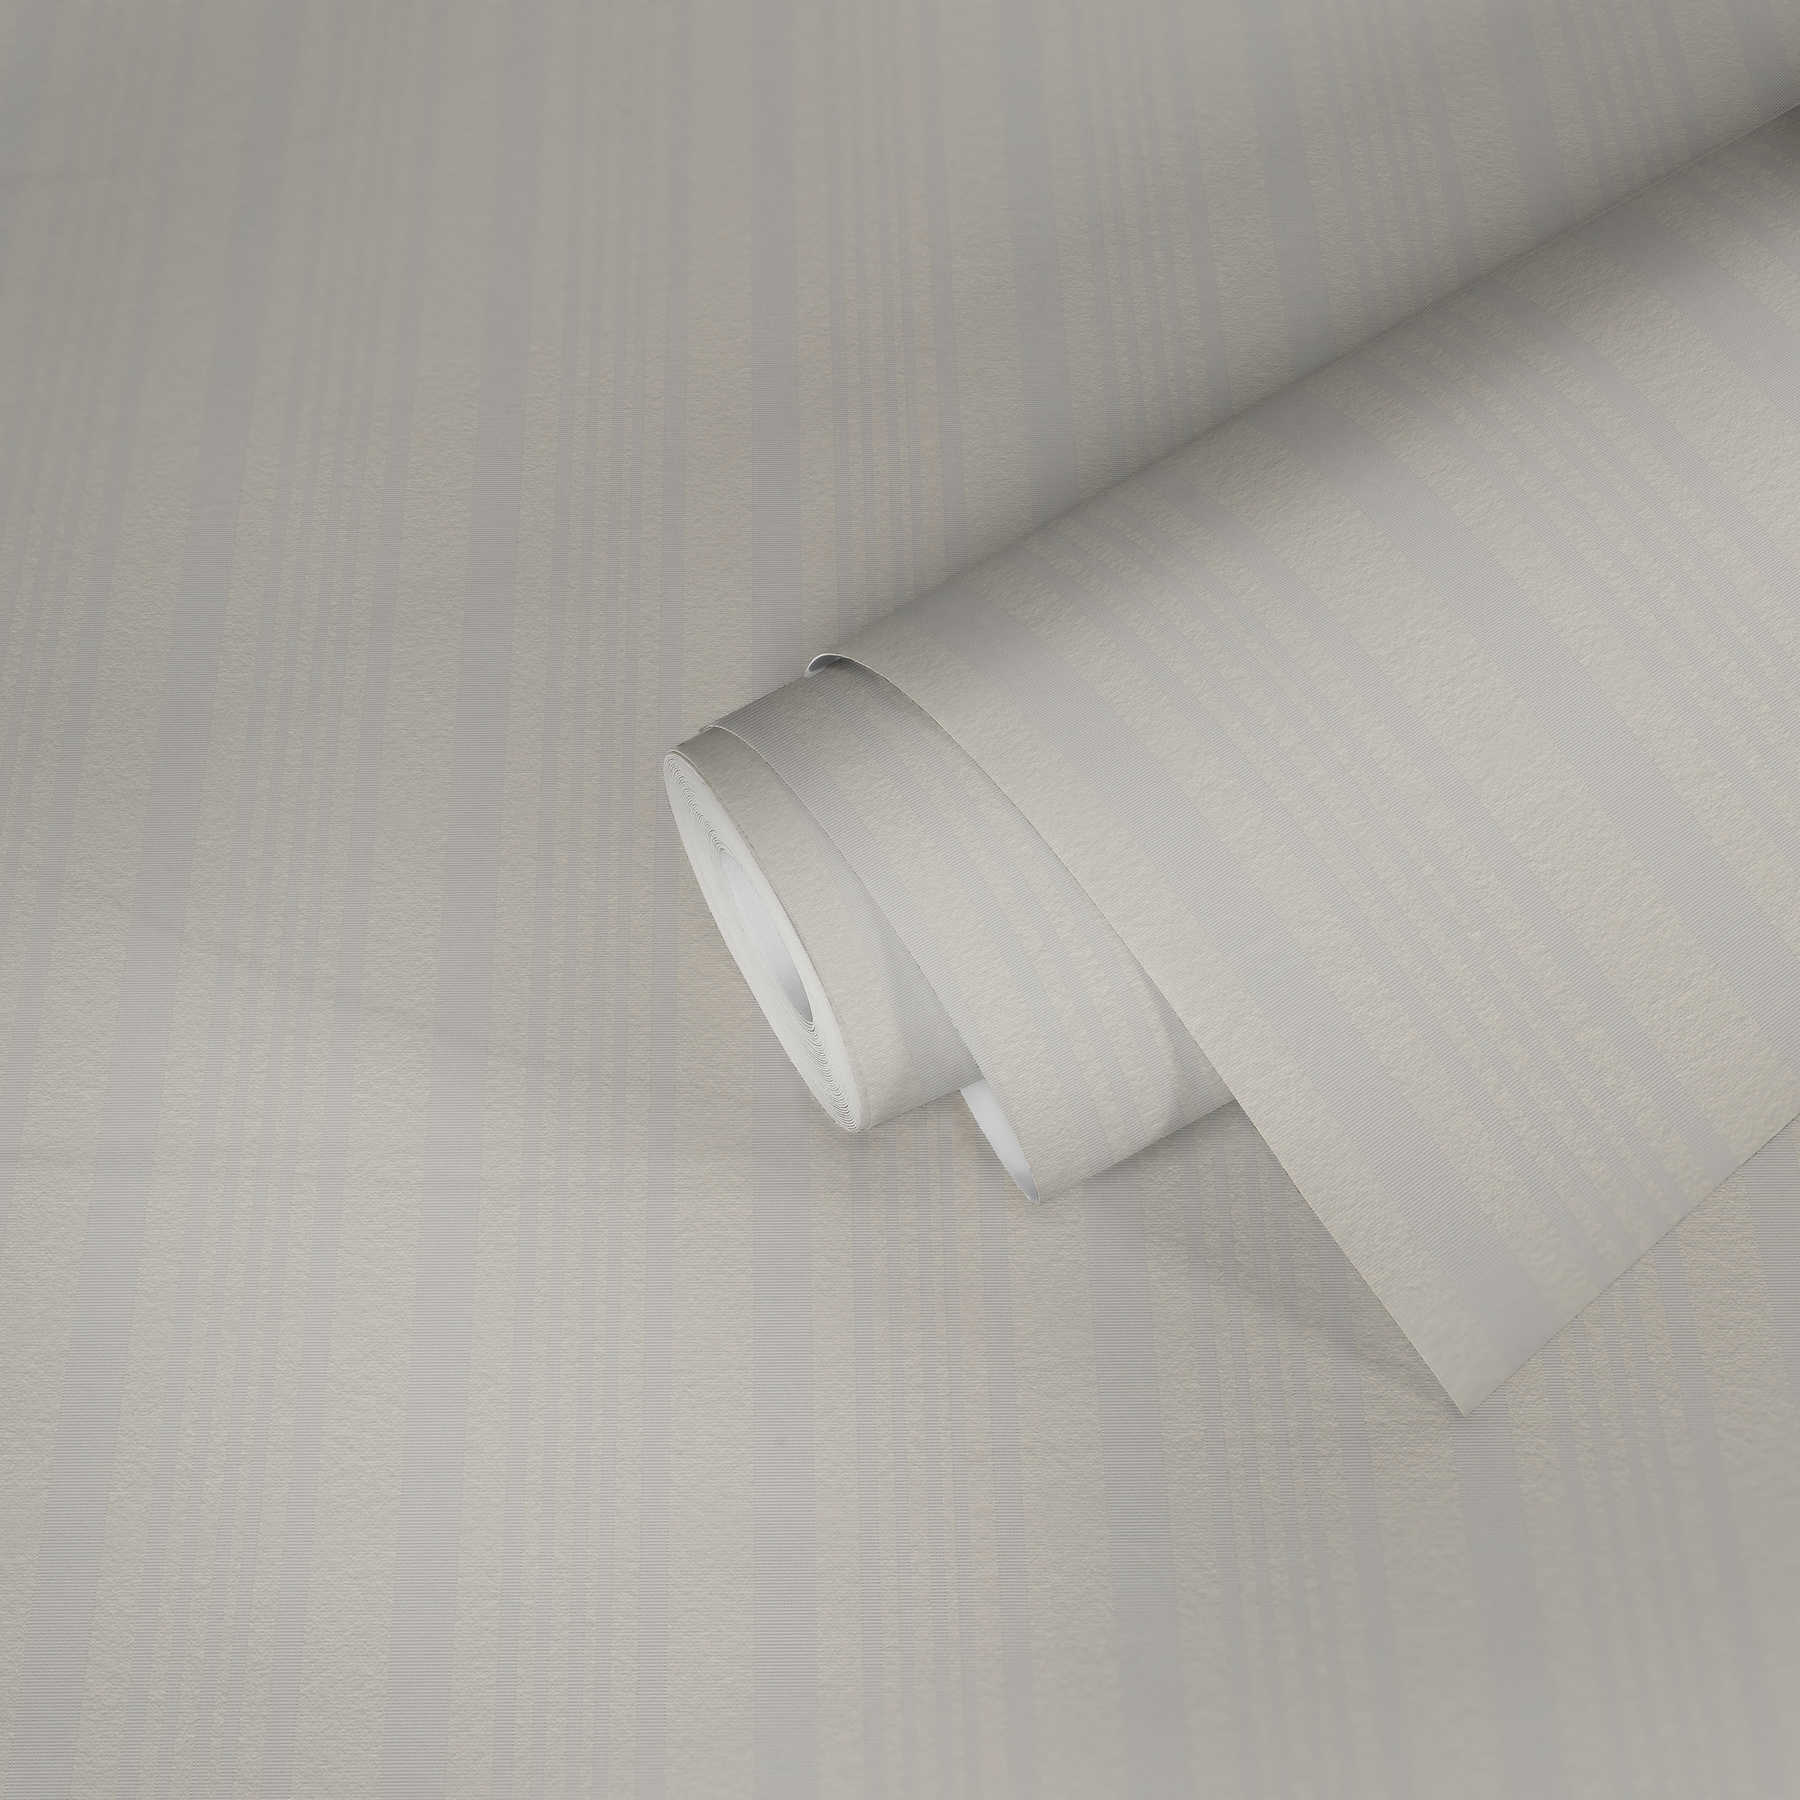             Stripes wallpaper narrow line design - white
        